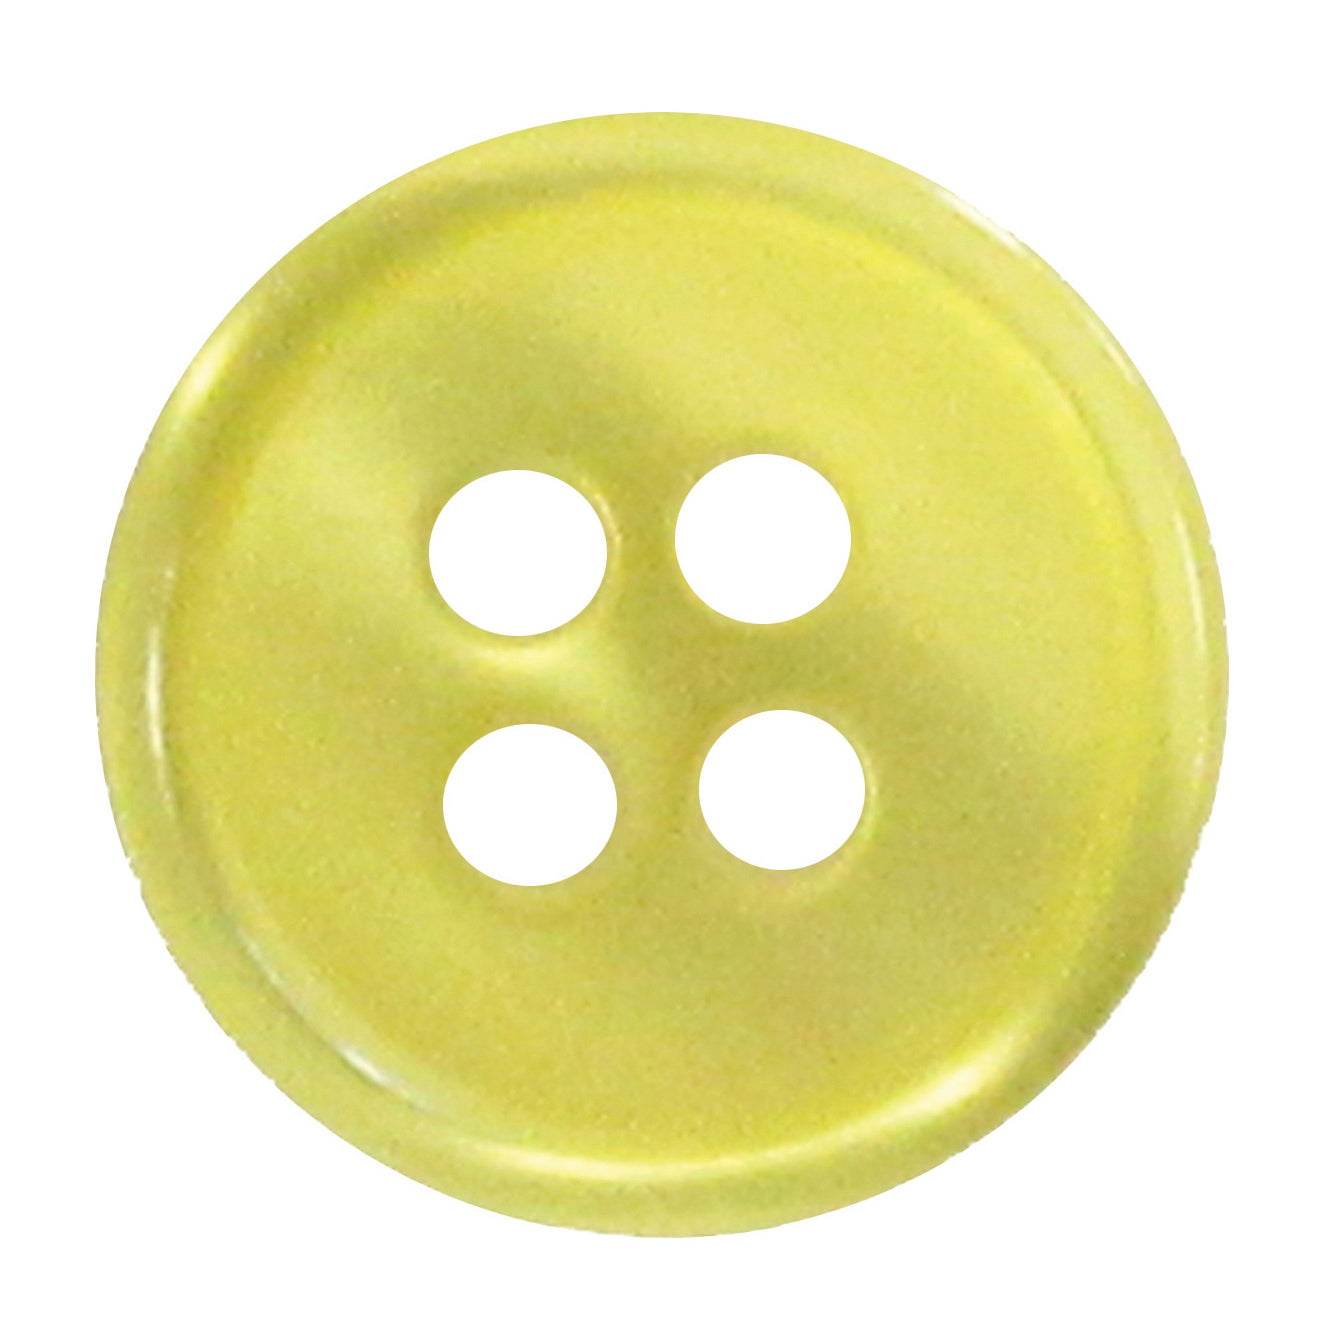 4 Hole Button - 13mm - Dark Yellow